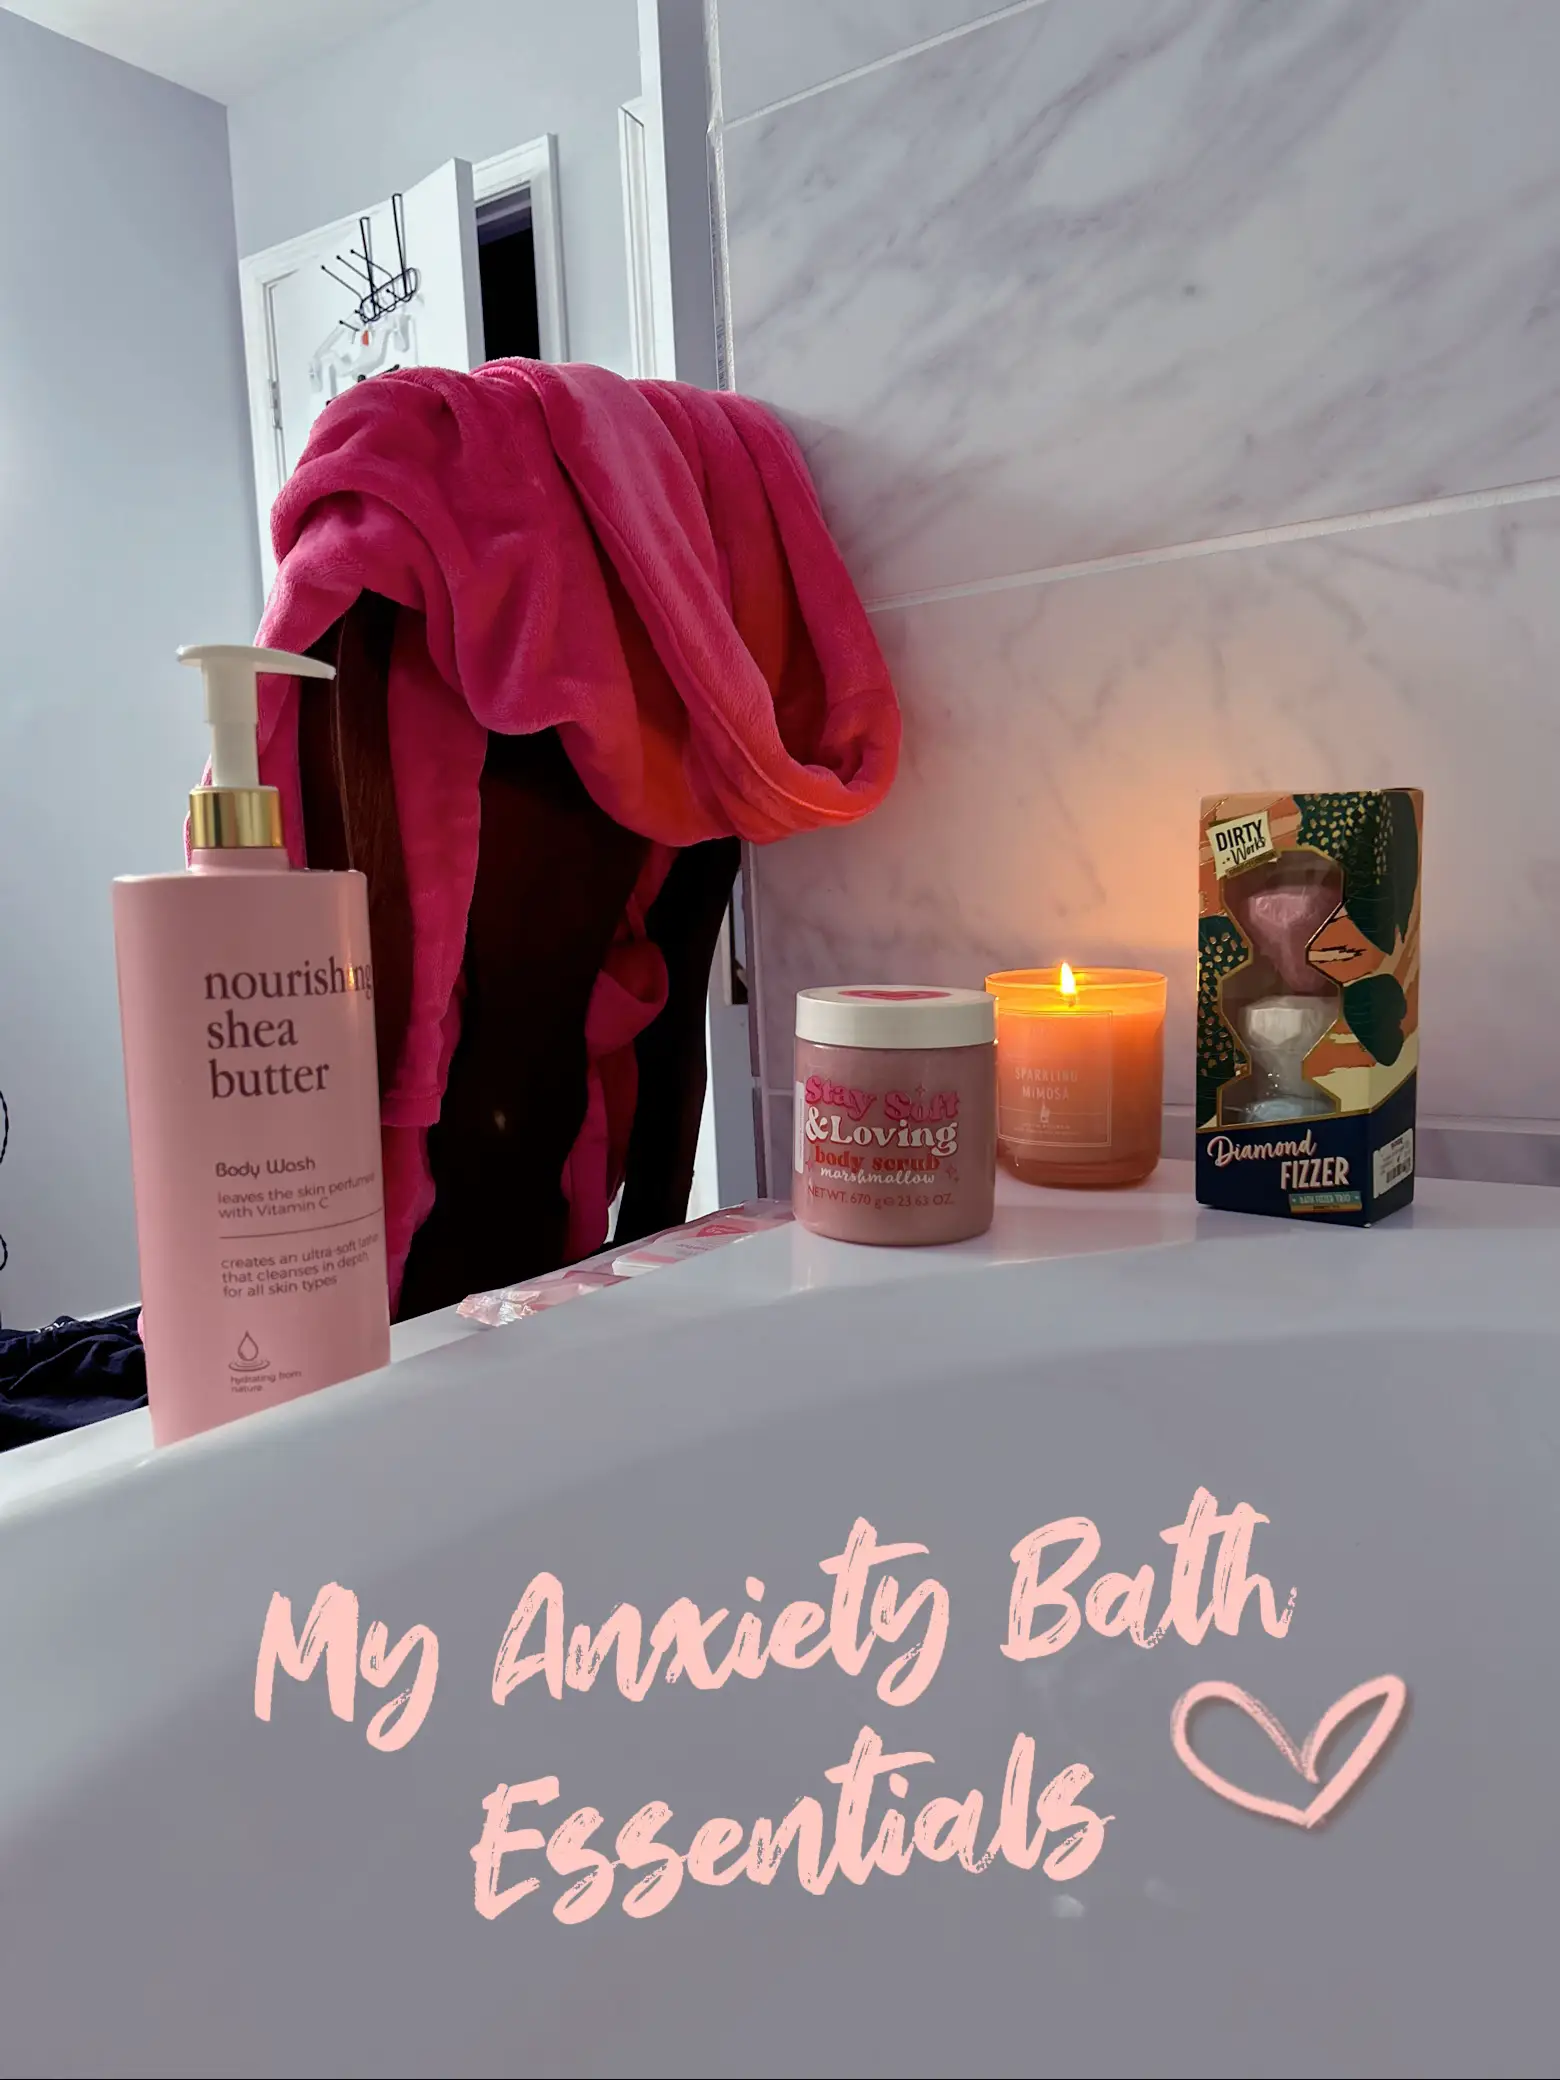 🫧Baby Bath Essentials 🫧, Gallery posted by Karissa